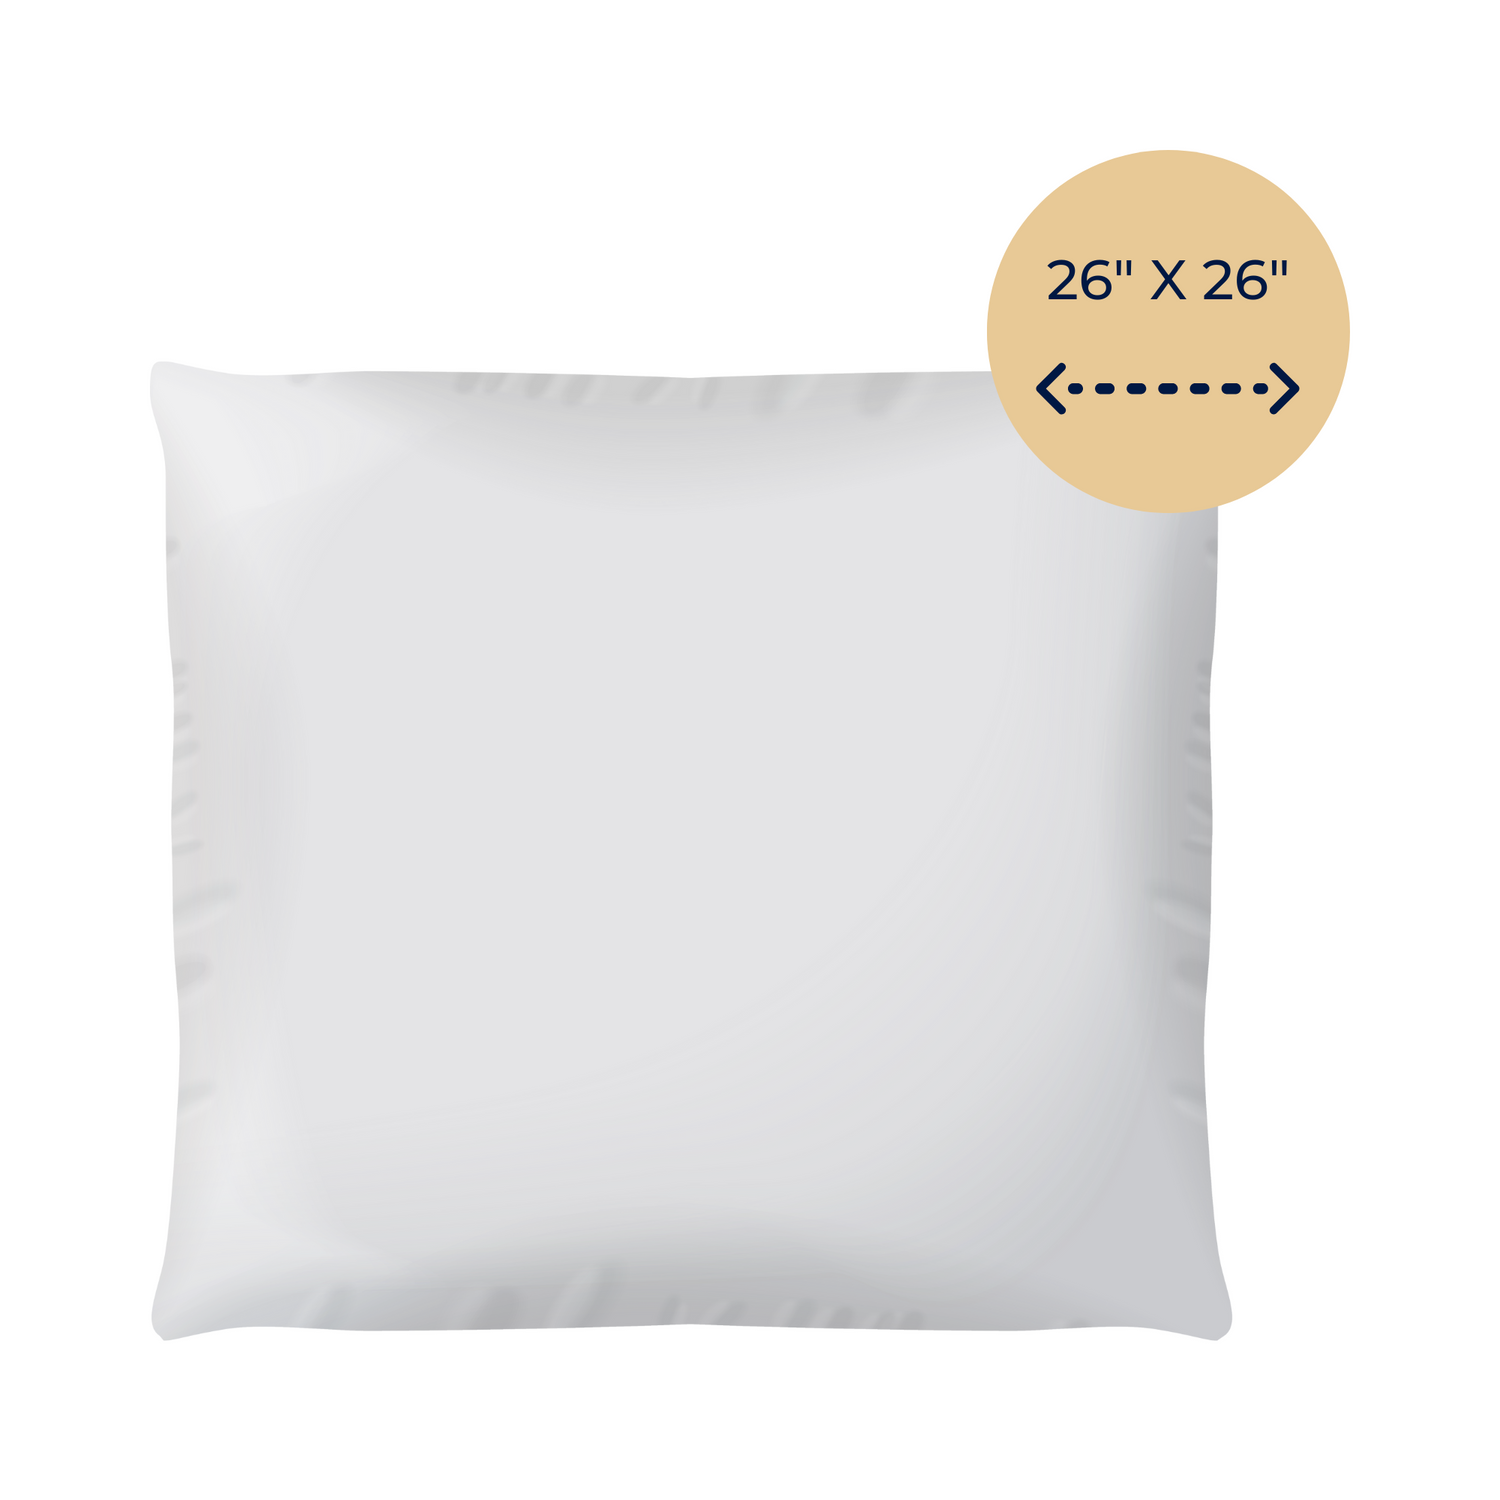 26" x 26" Decorative Throw Pillow - American Comfort Luxury Linens